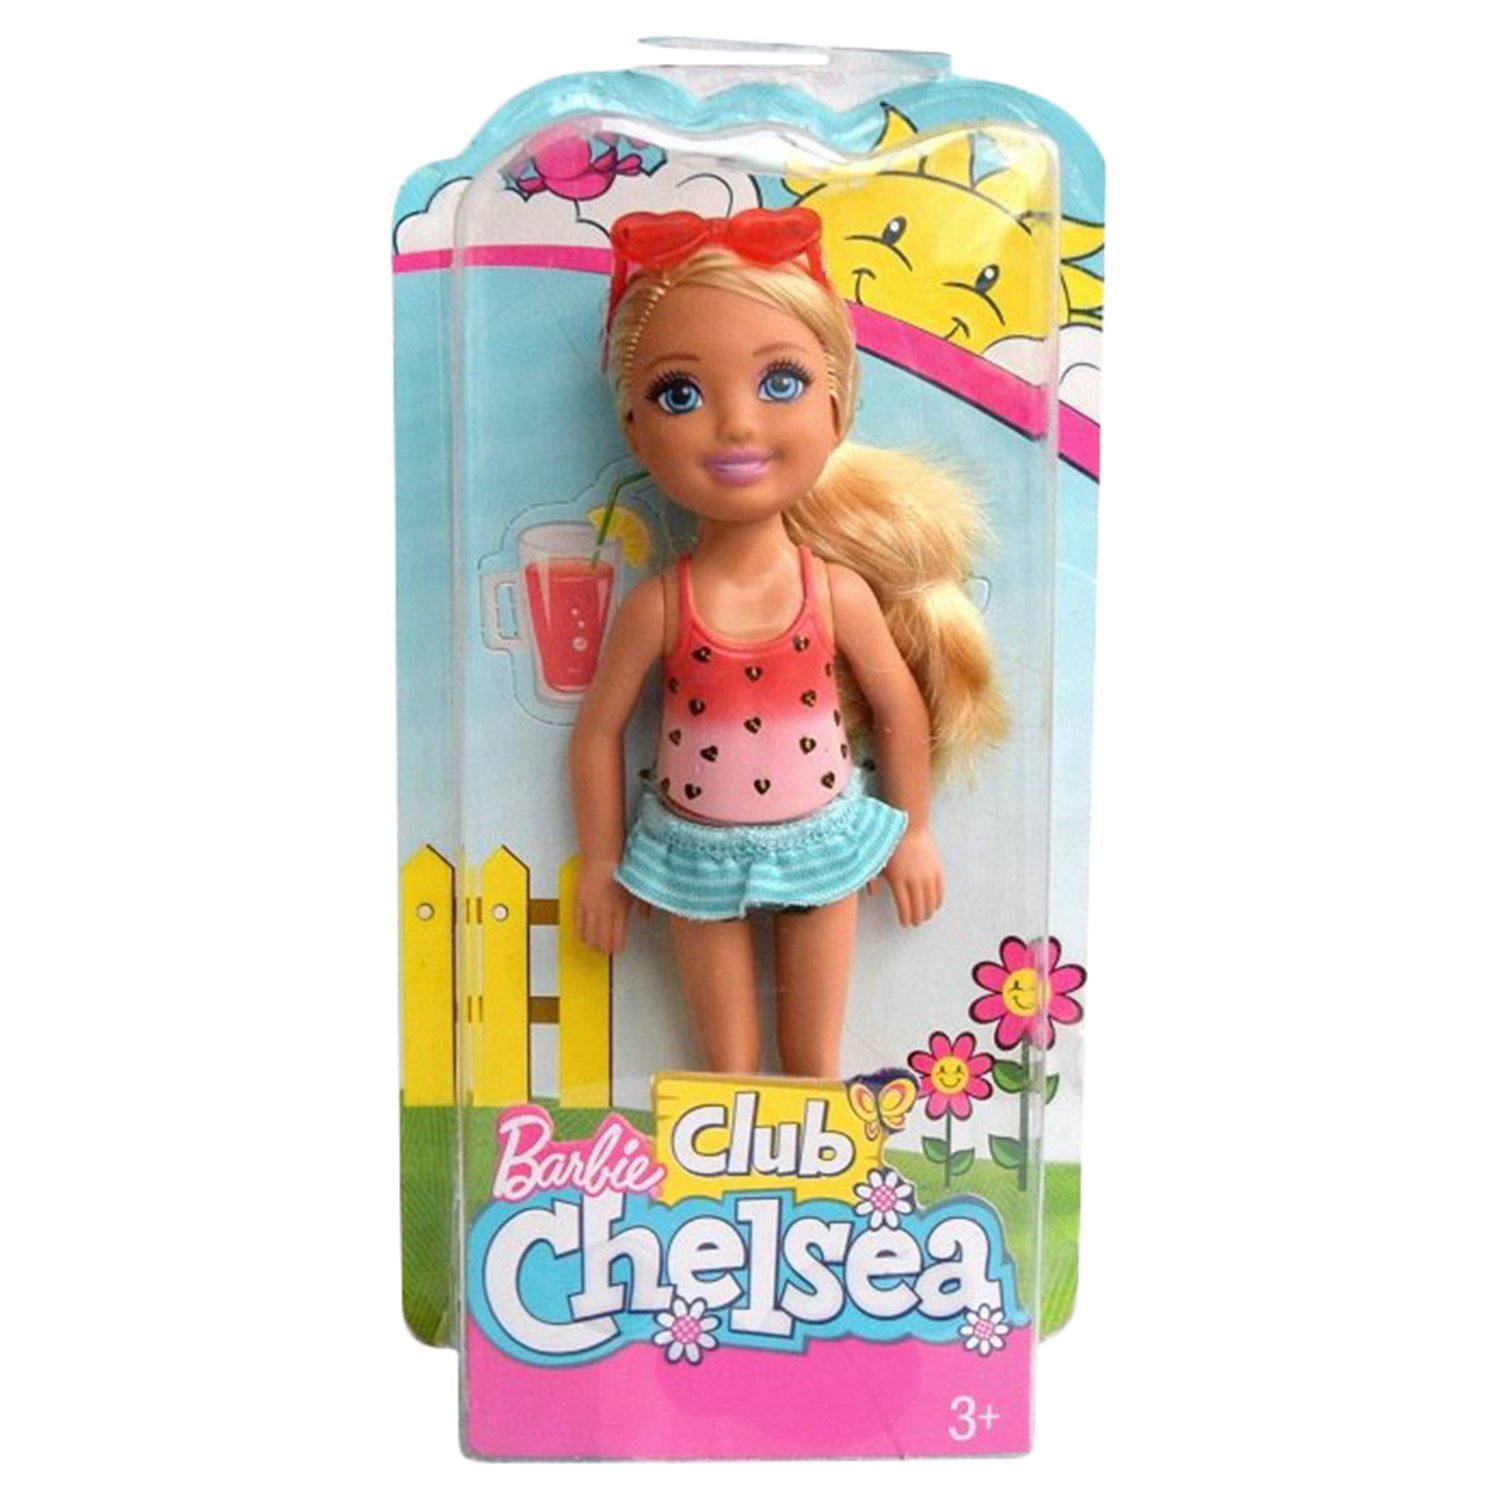 Кукла Челси в купальнике Клуб Челси  